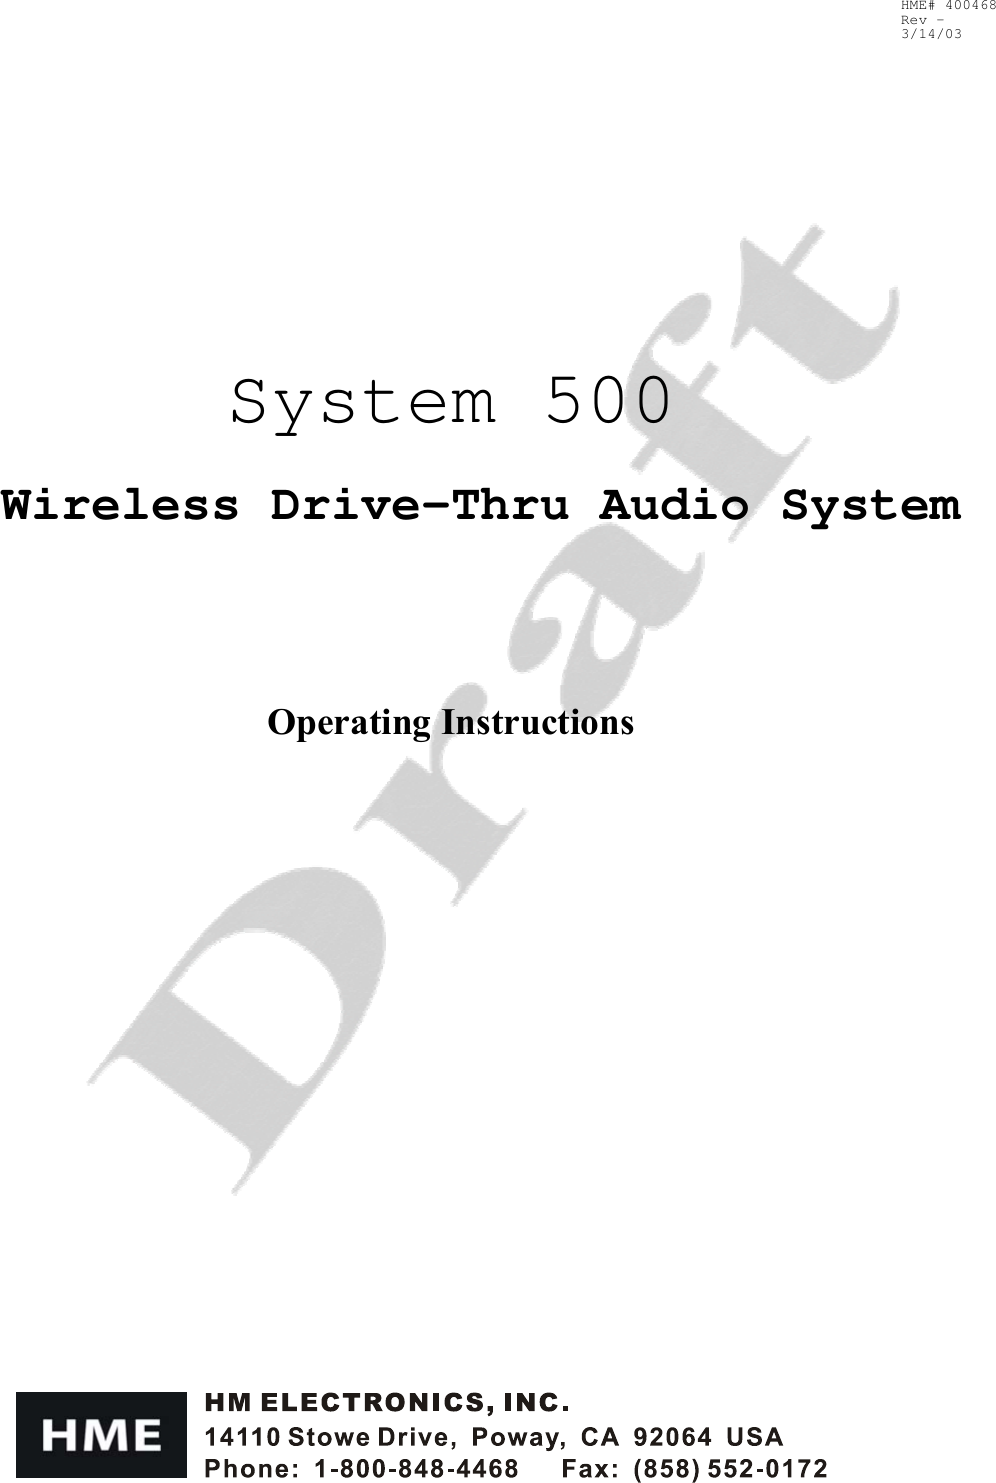  HME# 400468 Rev -    3/14/03  System 500 Wireless Drive-Thru Audio System      Operating Instructions 